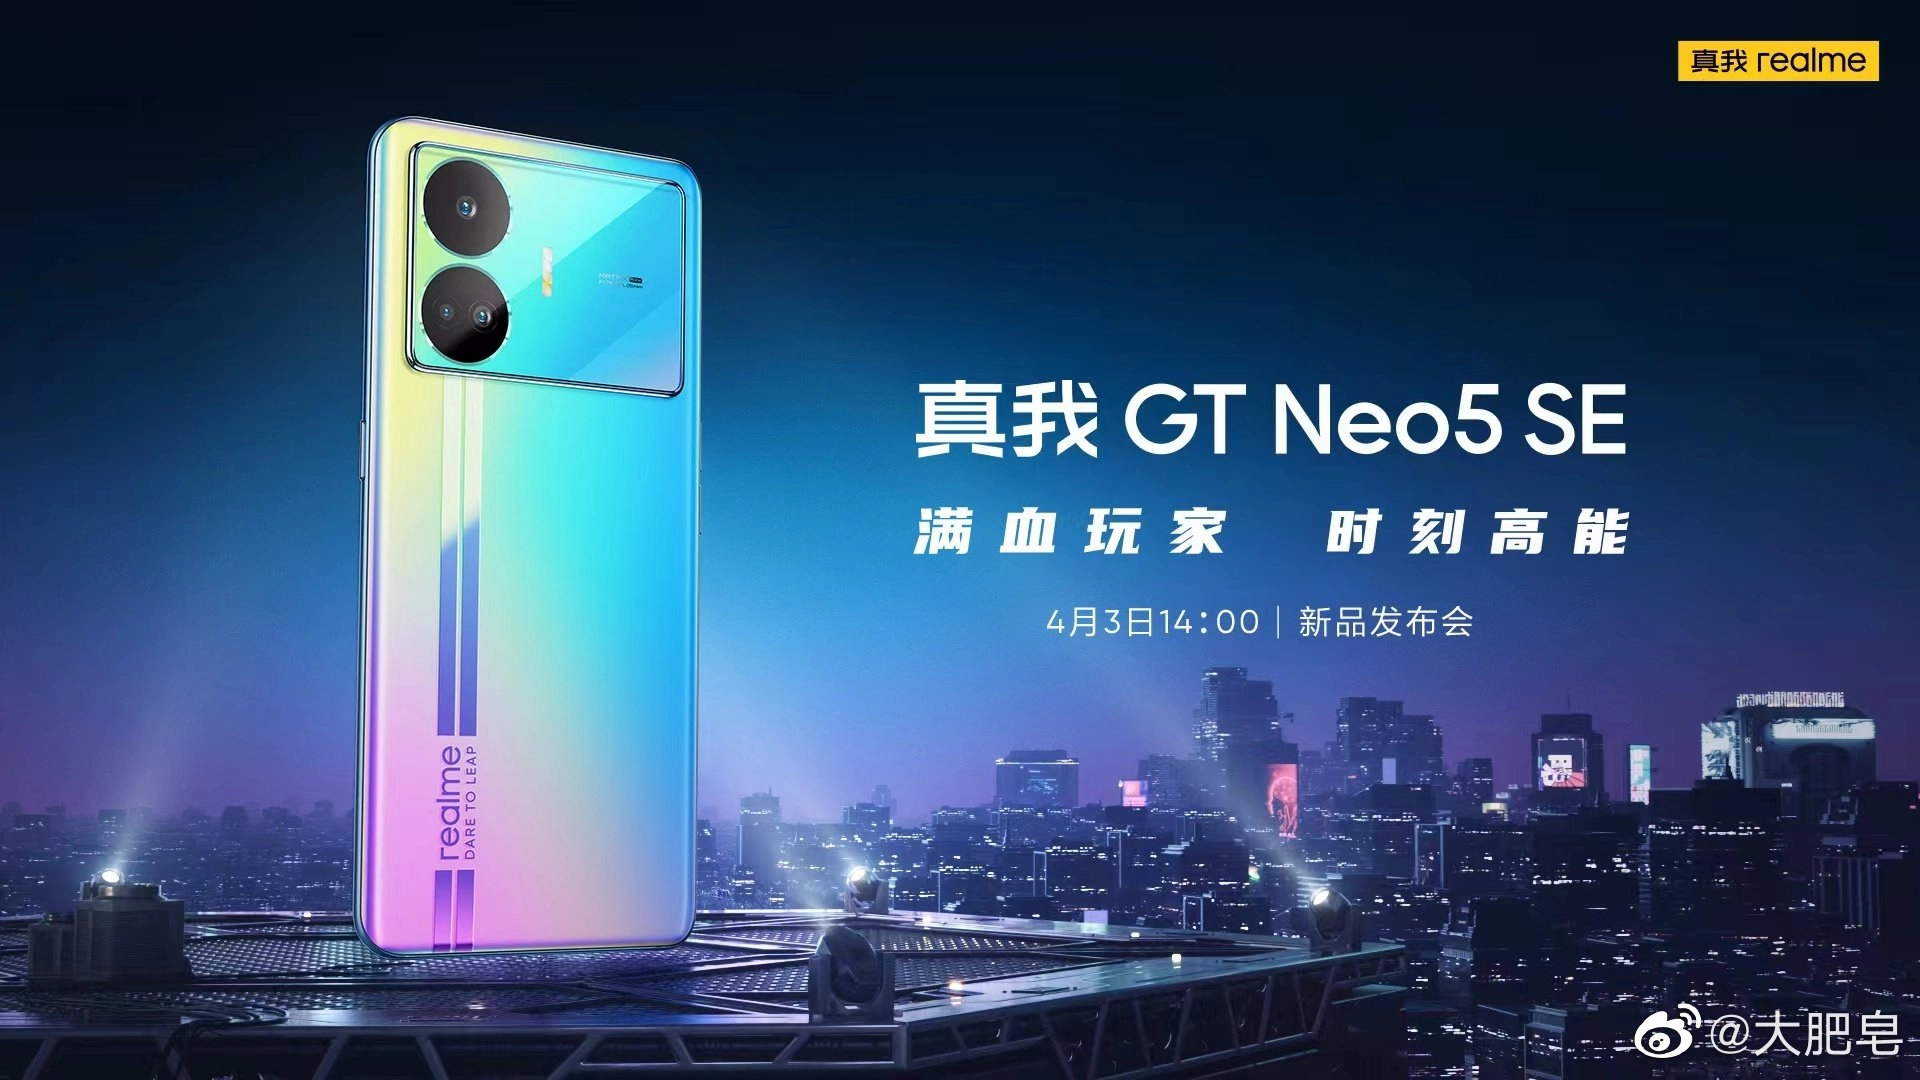 Realme GT Neo 5 SE